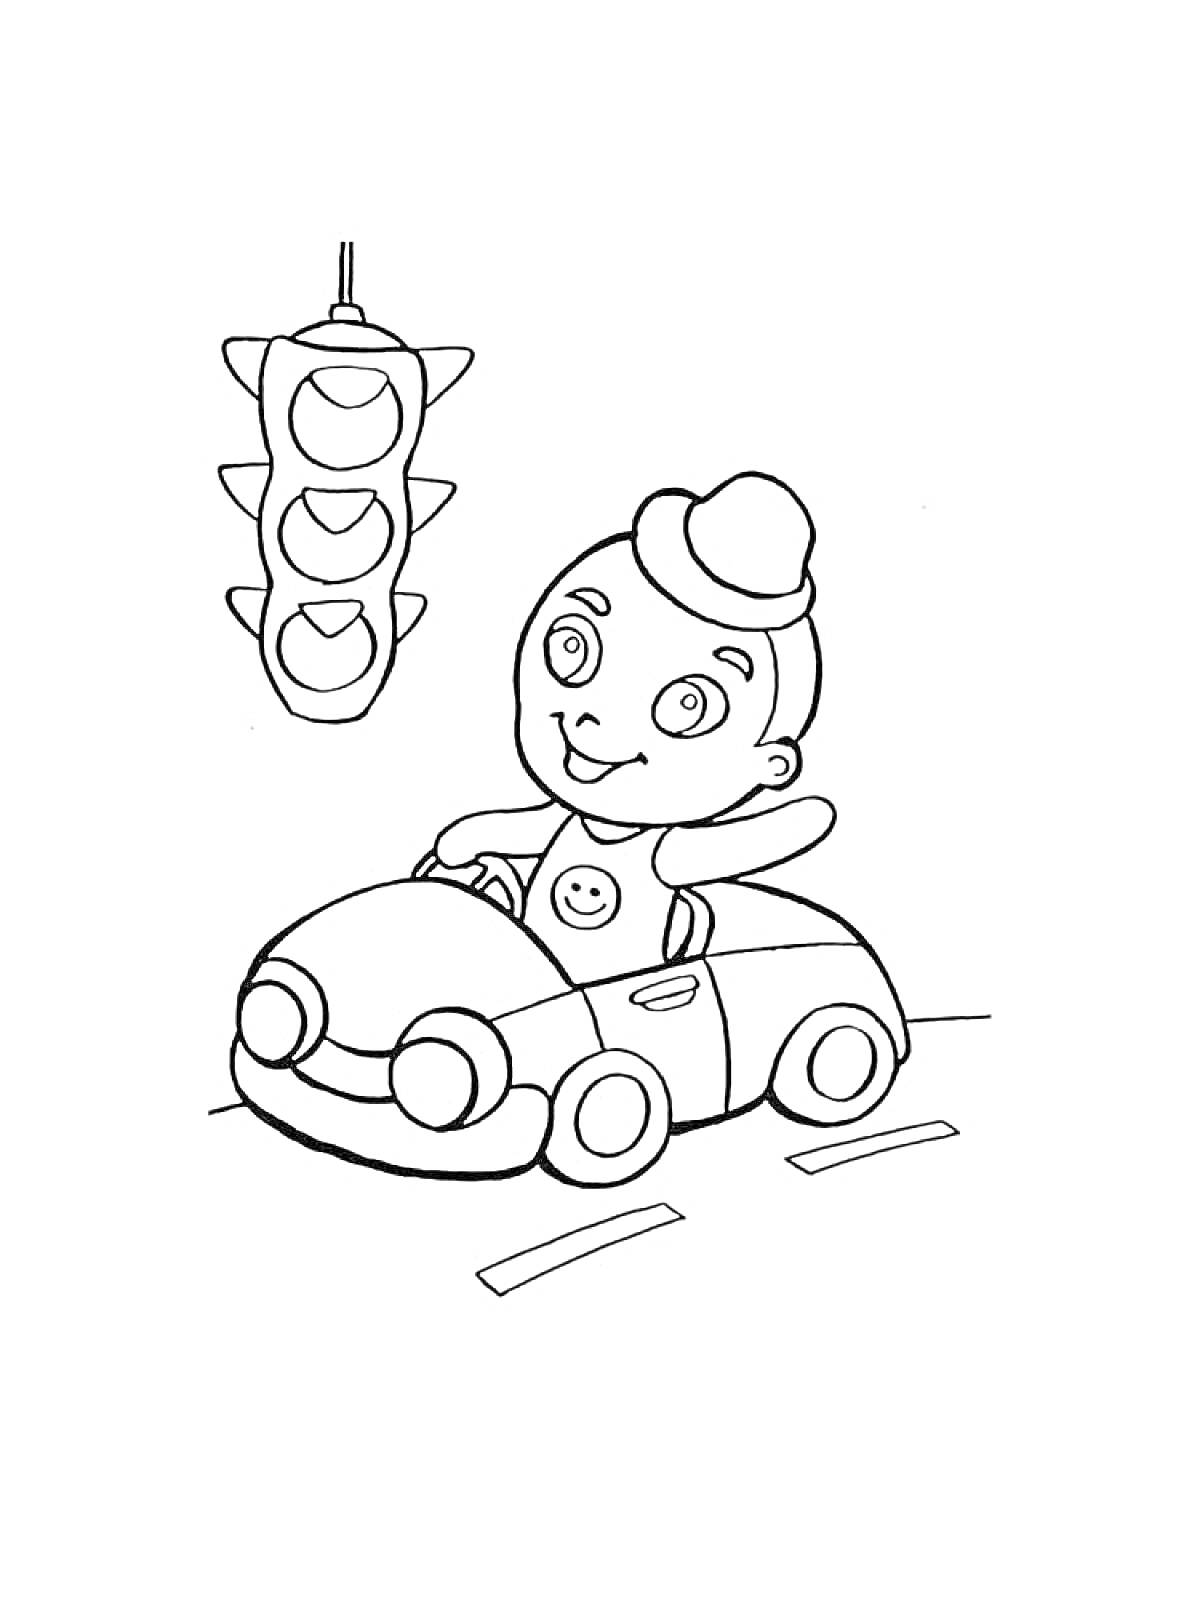 Ребенок в машине под светофором